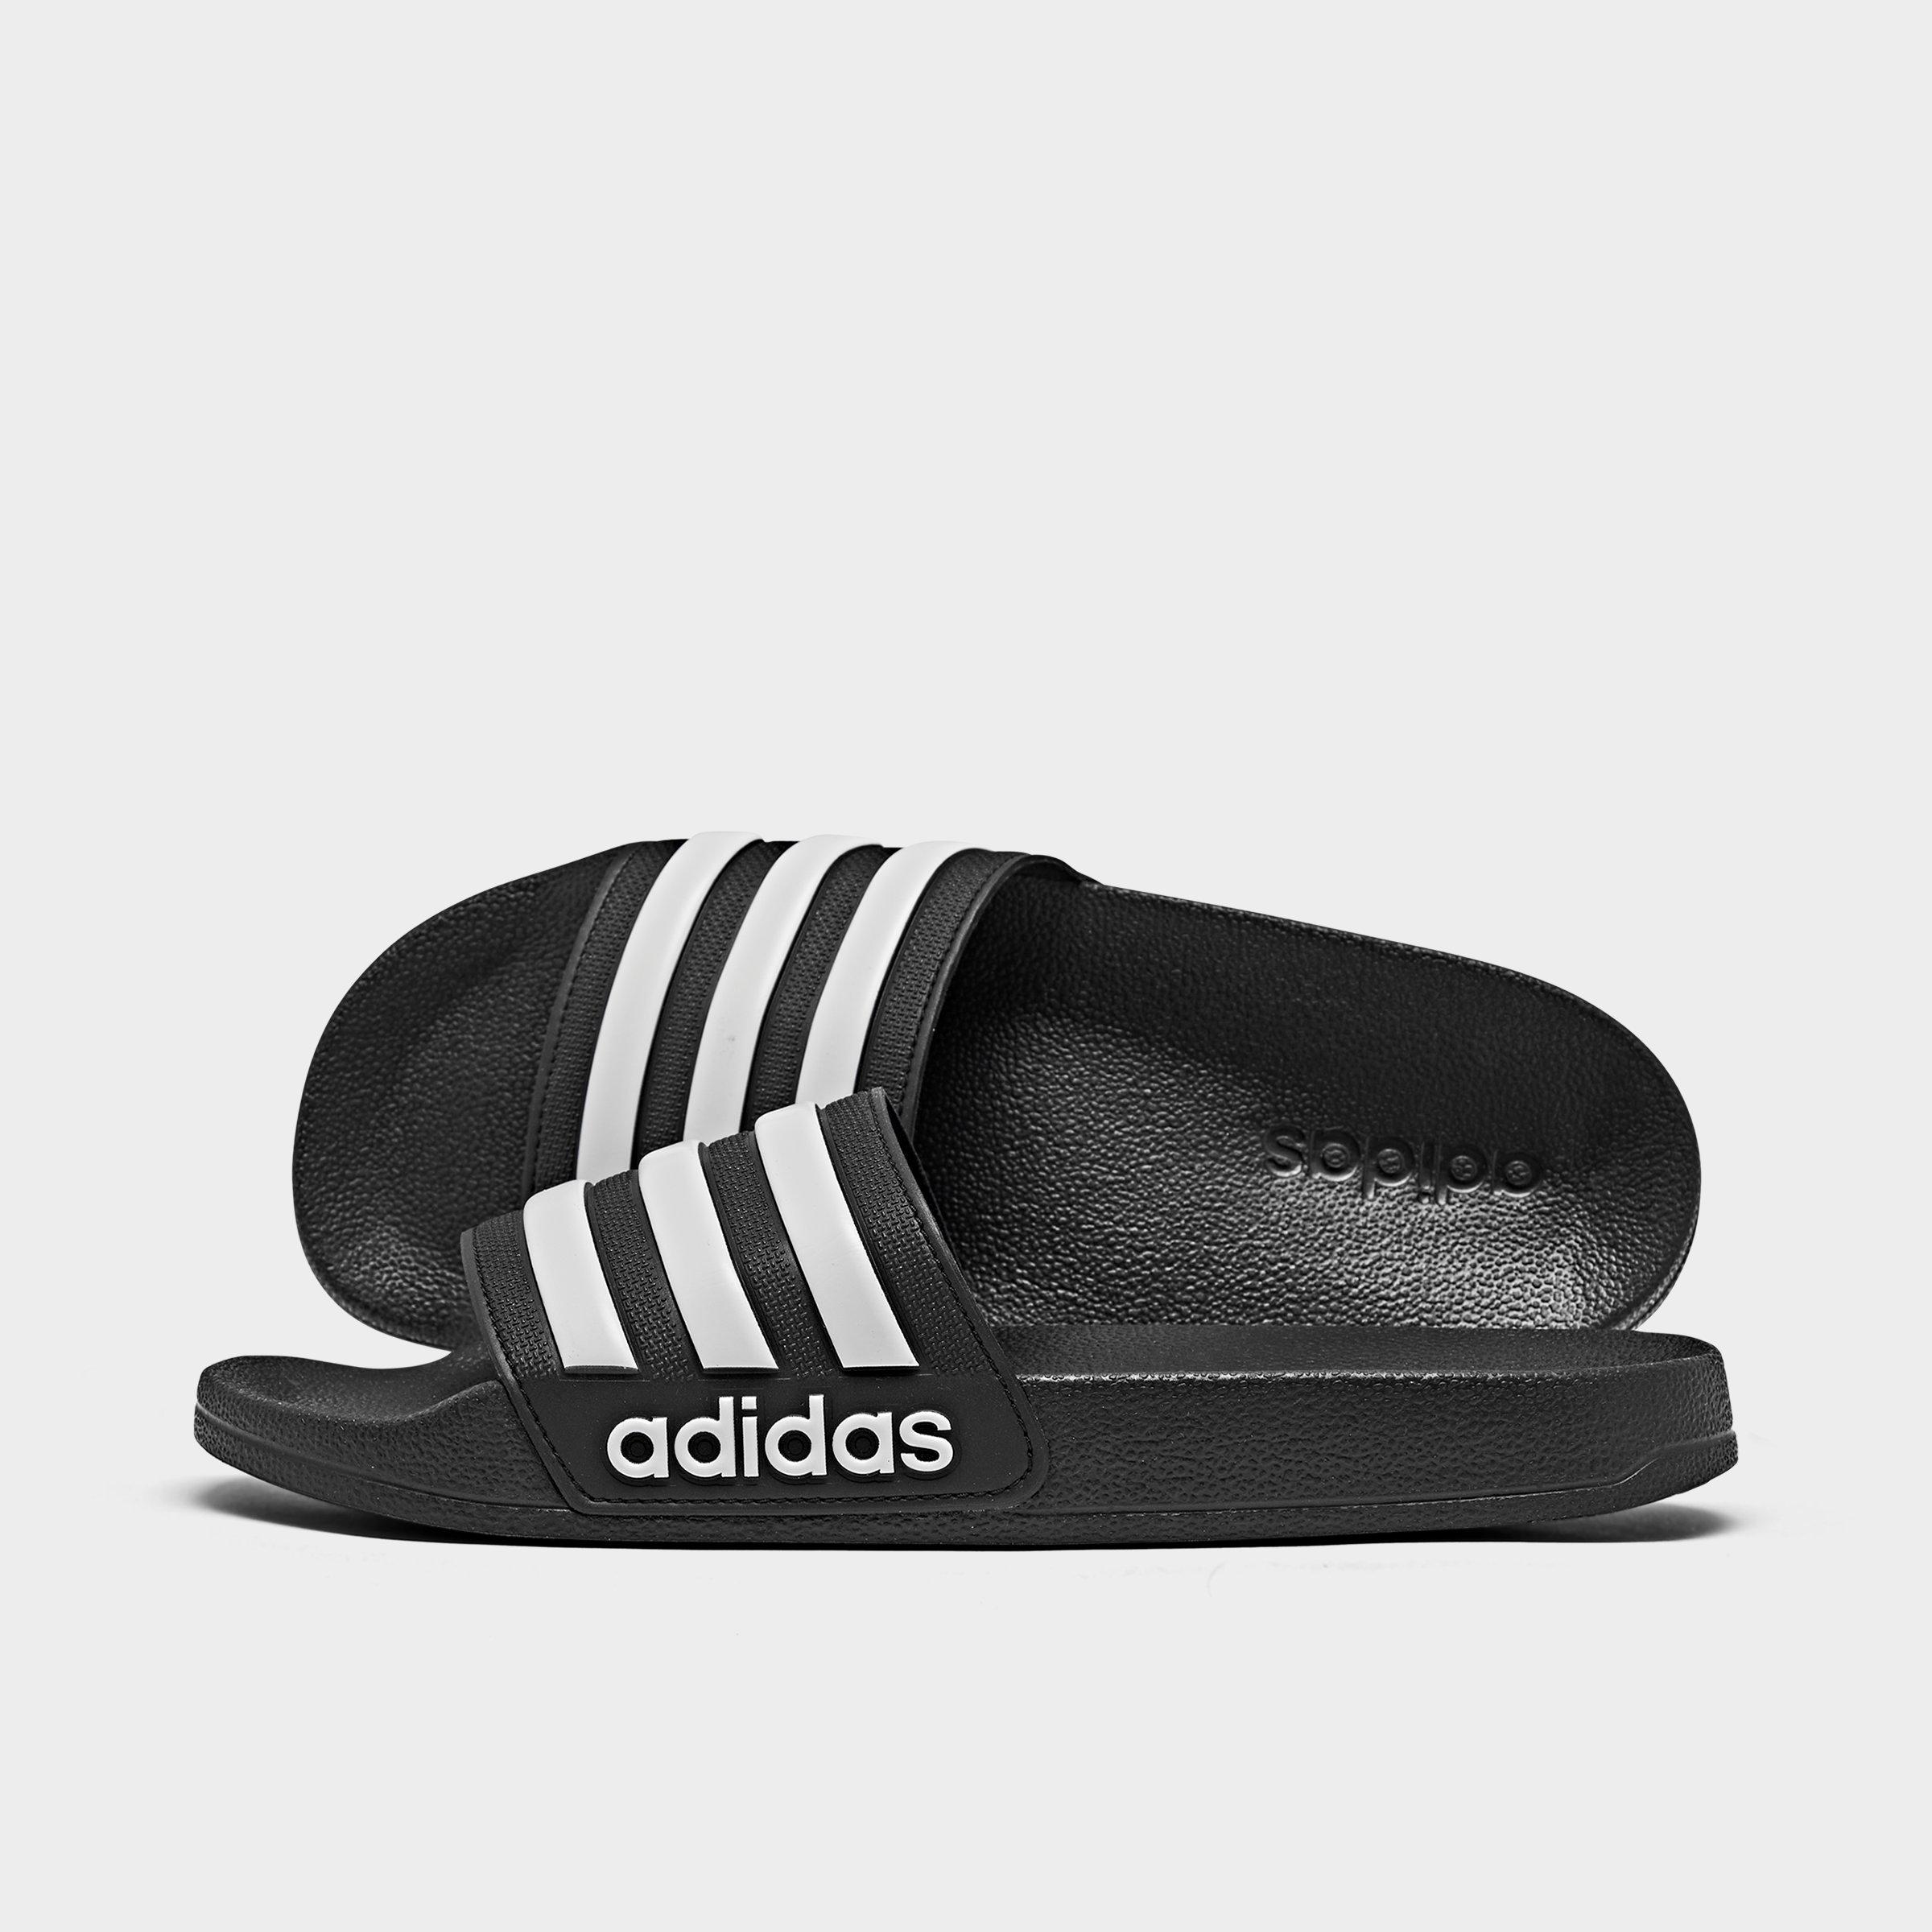 adidas sandals for boys